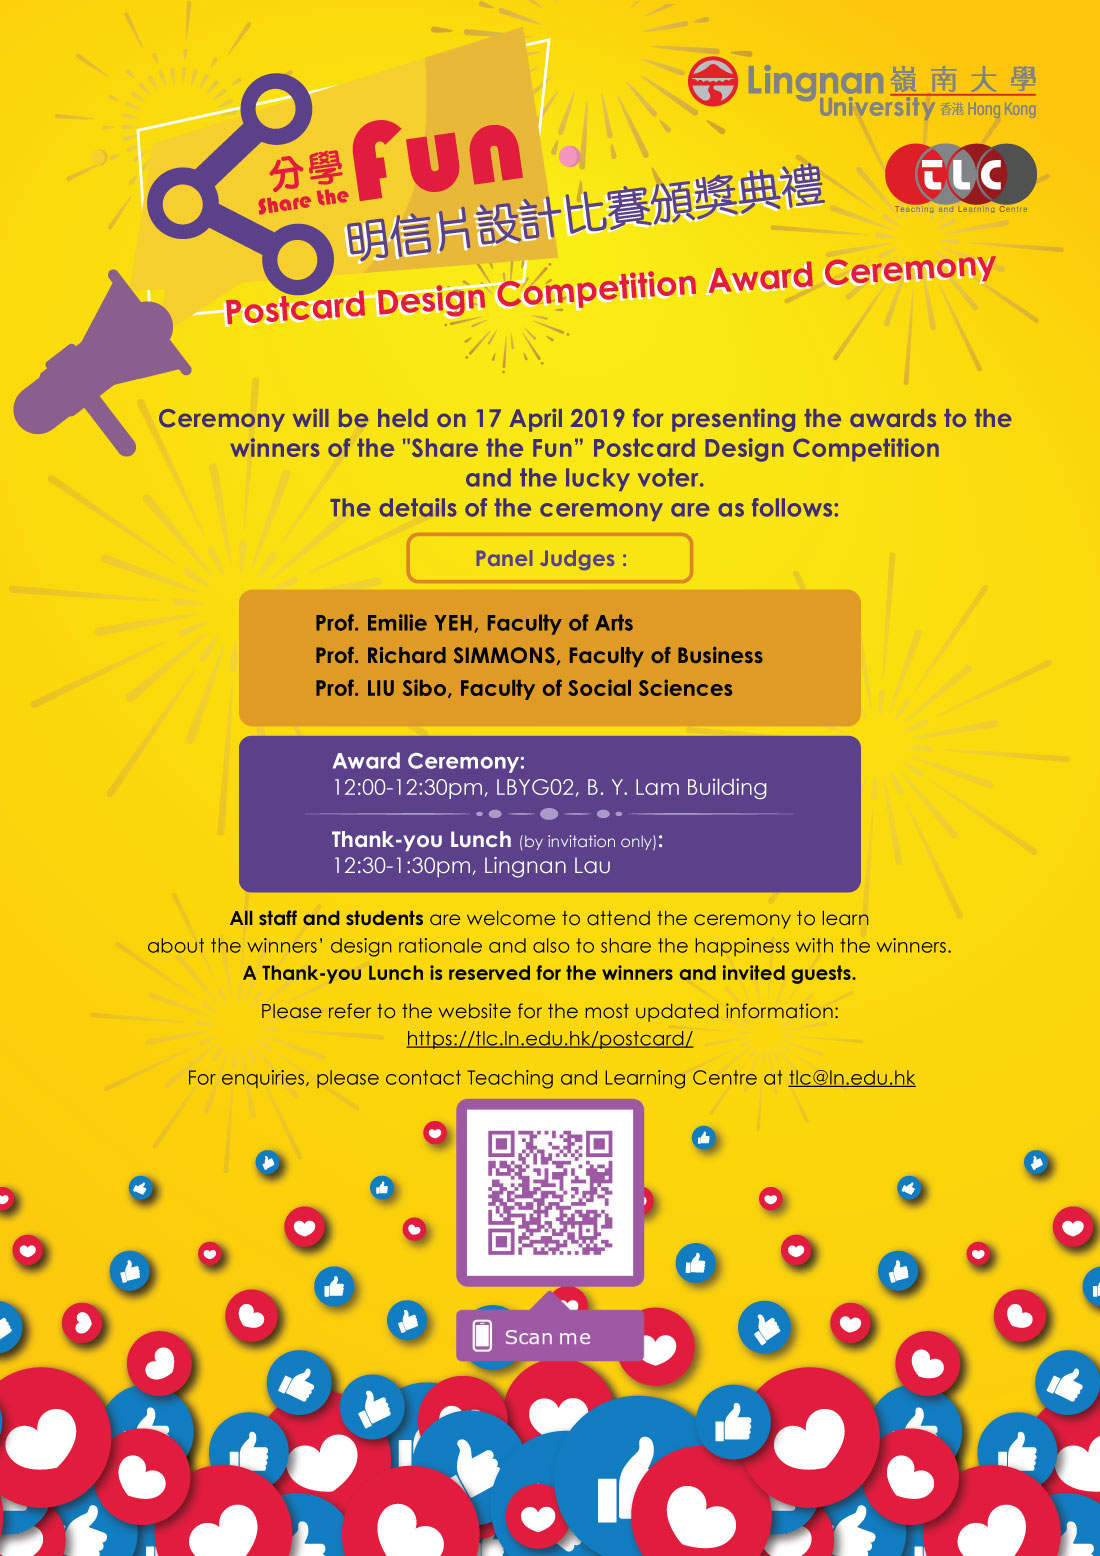 Share the Fun Postcard Design Competition Award Ceremony